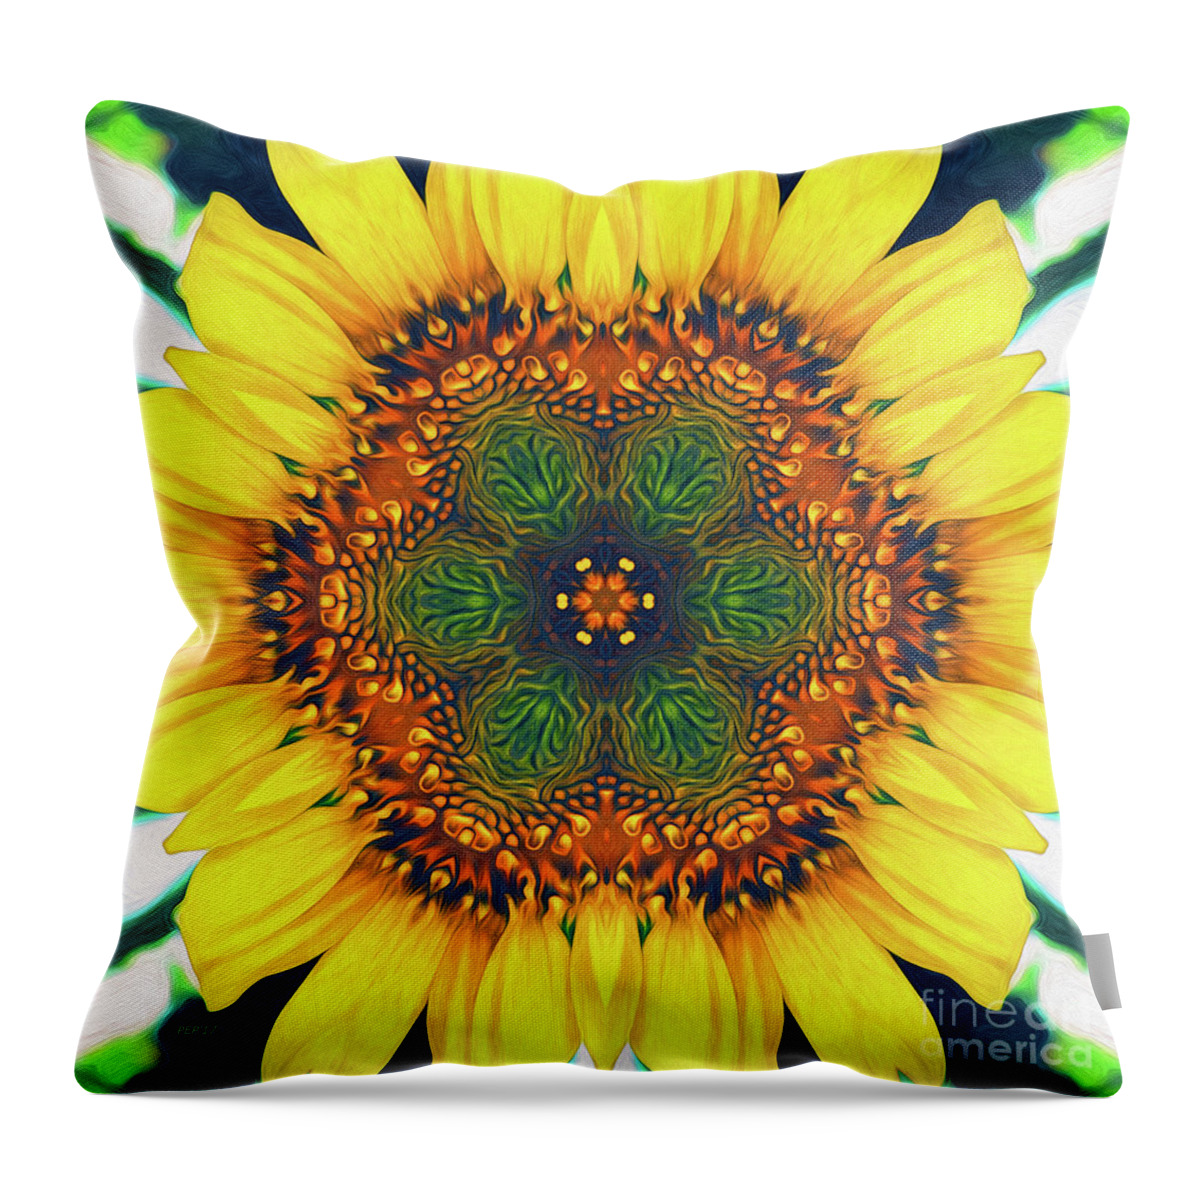 Sunflower Throw Pillow featuring the digital art Structure of A Sunflower by Phil Perkins